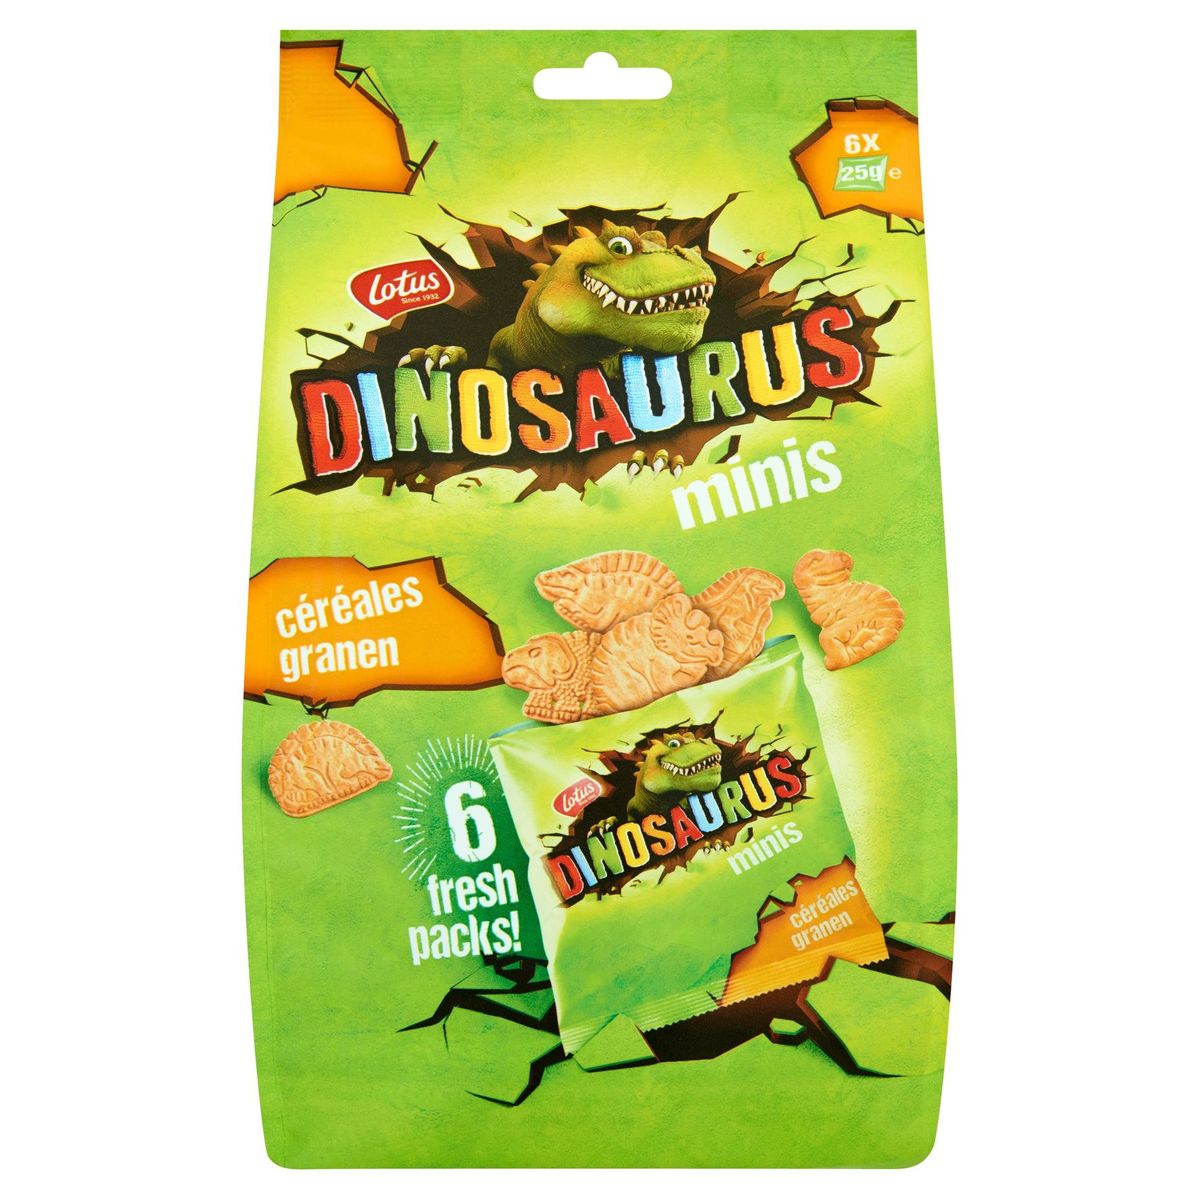 Lotus Dinosaurus Minis Cereales 6 X 25 G Carrefour Site